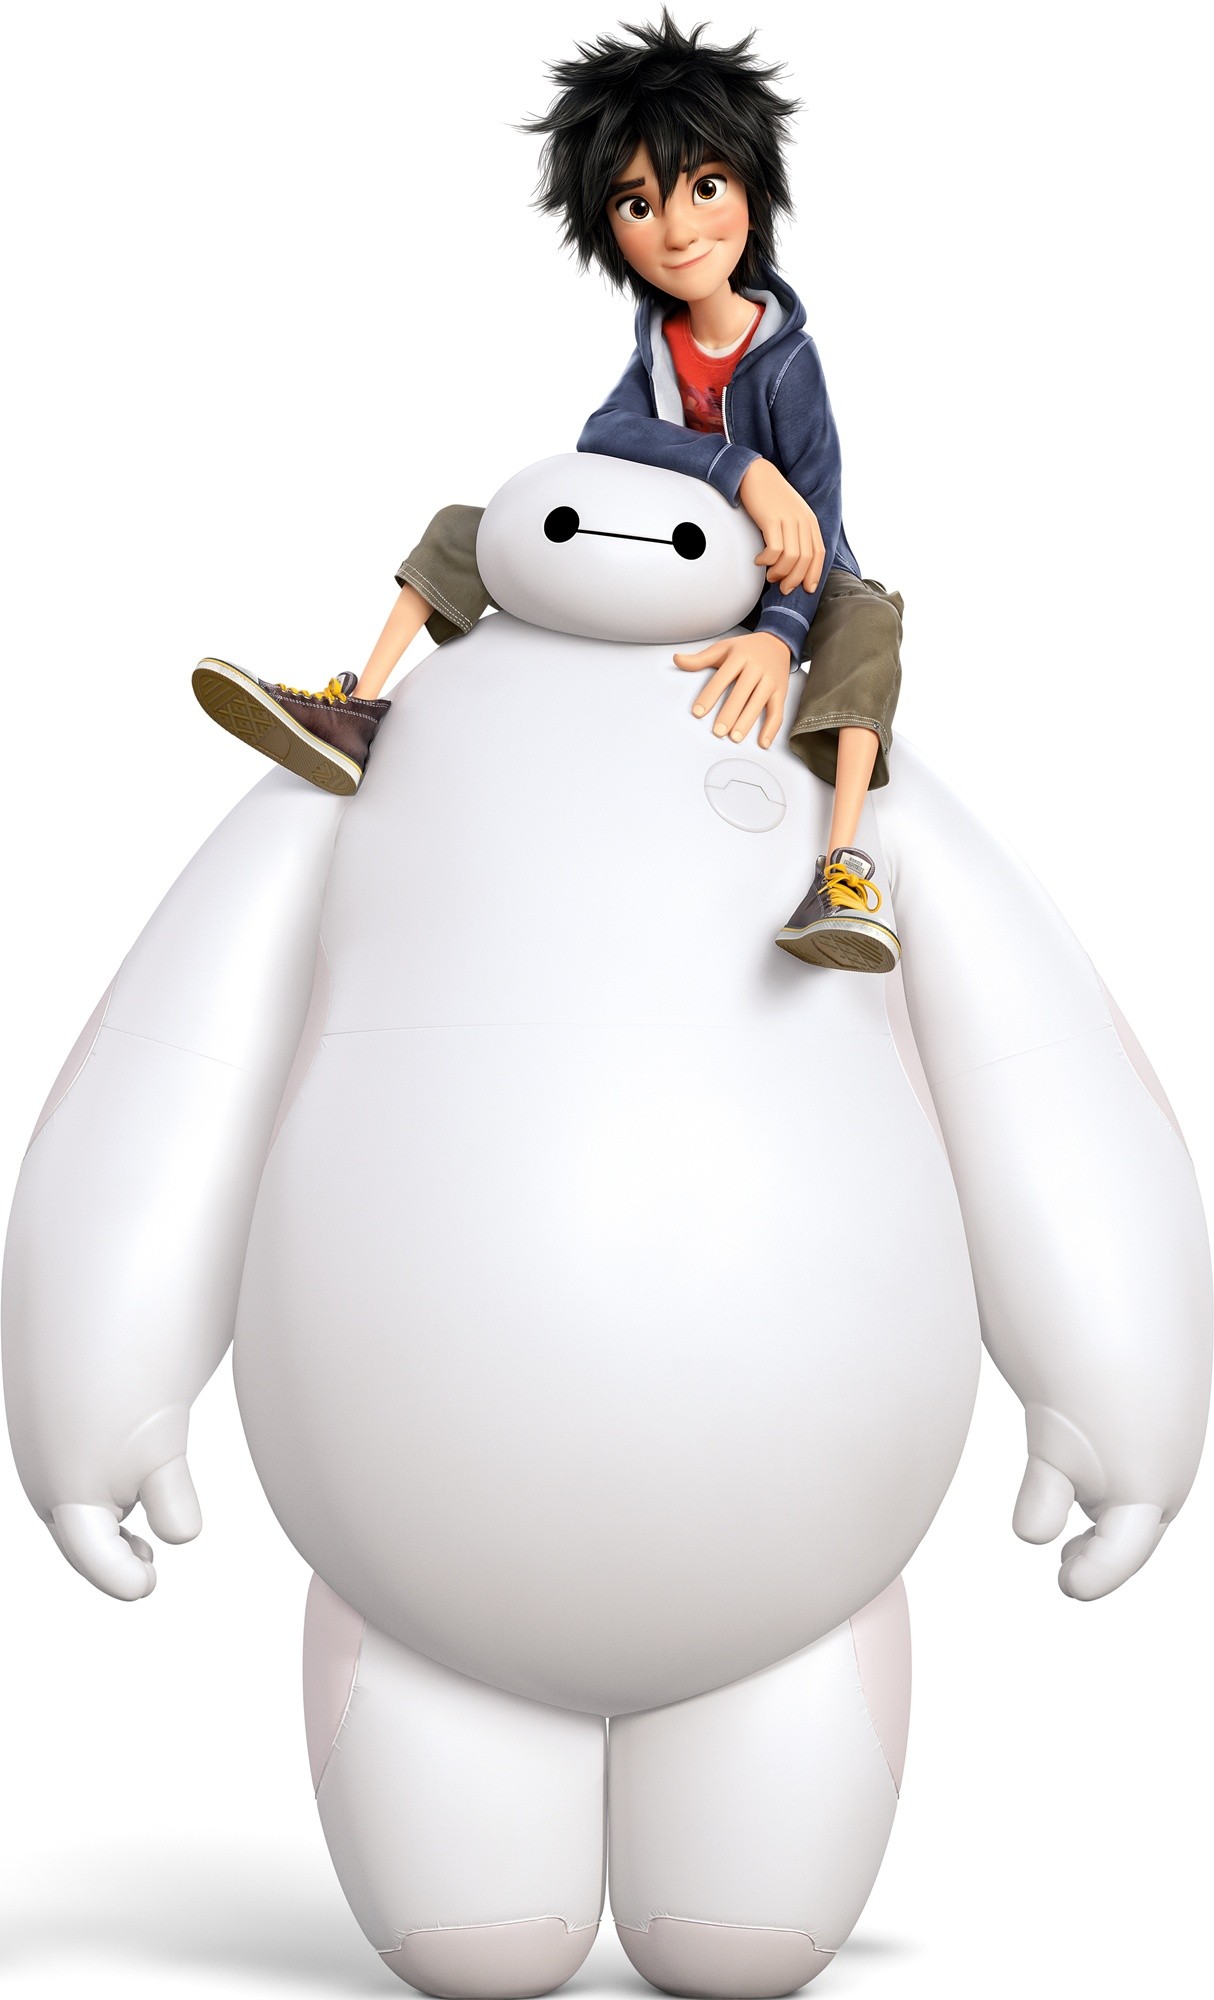 Baymax and Hiro Hamada from Walt Disney Pictures' Big Hero 6 (2014)